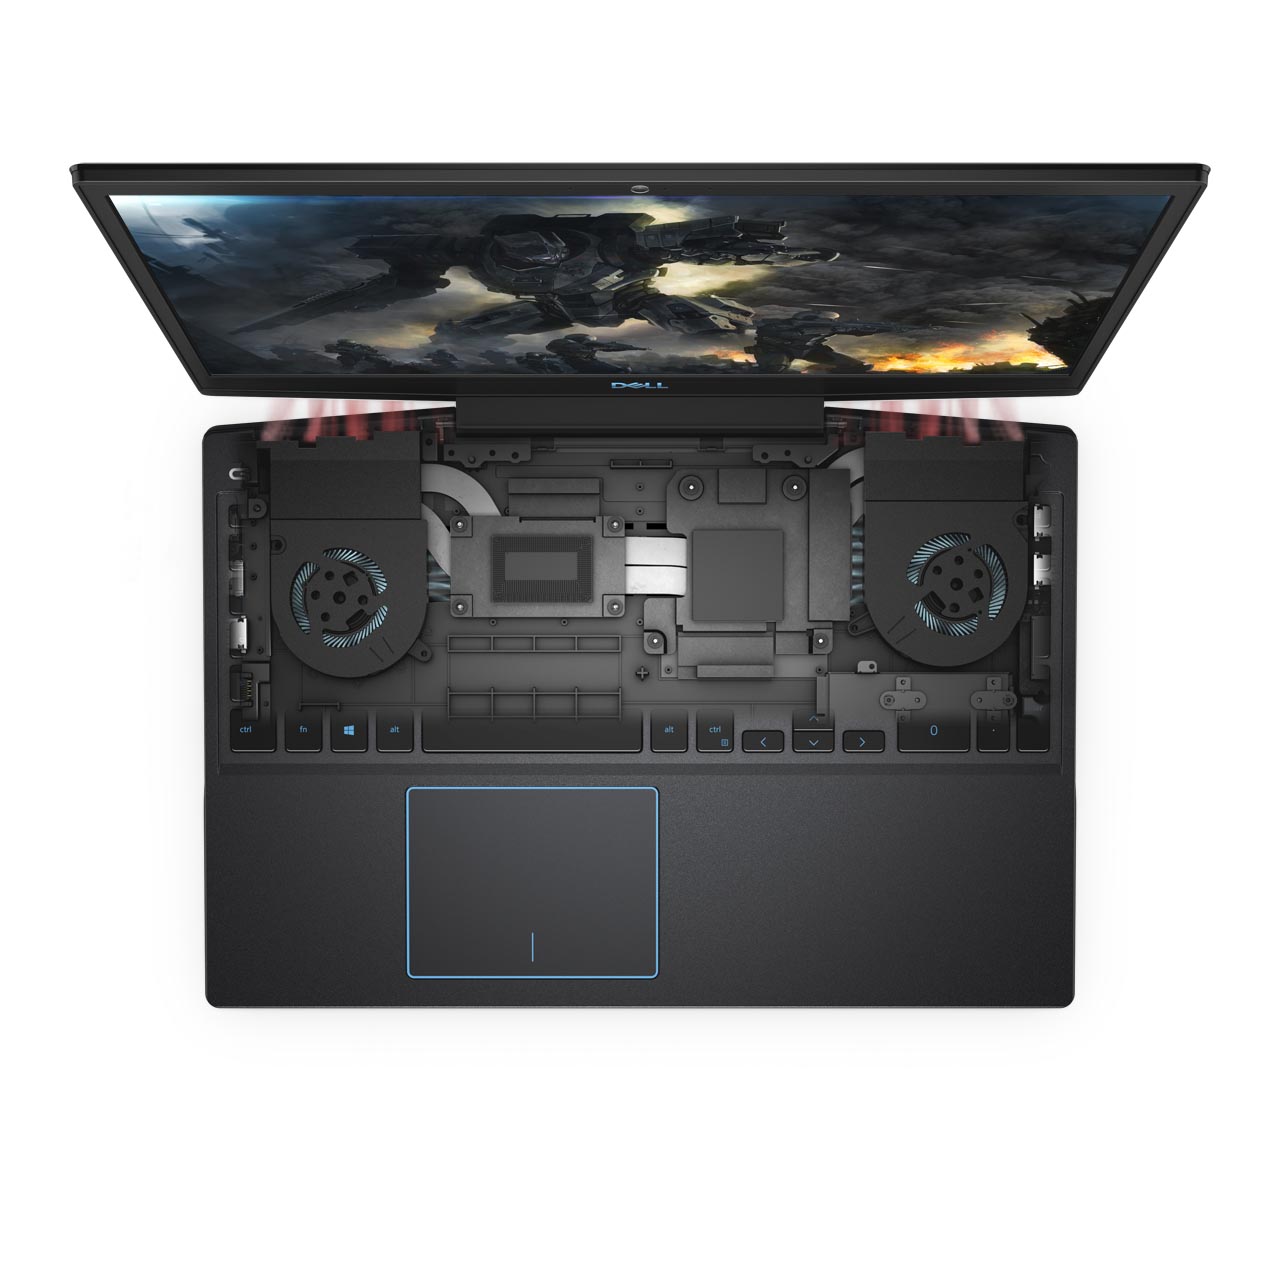 Laptop Dell G3 15 3590 (Intel Core i7-9750H/2.60 GHz/12 MB/ 2x4GB RAM/512GB SSD/6GB NVIDIA GeForce GTX 1660Ti/15.6 FHD/WL+BT/McAfee MDS/Win10Home,1Yr) -...